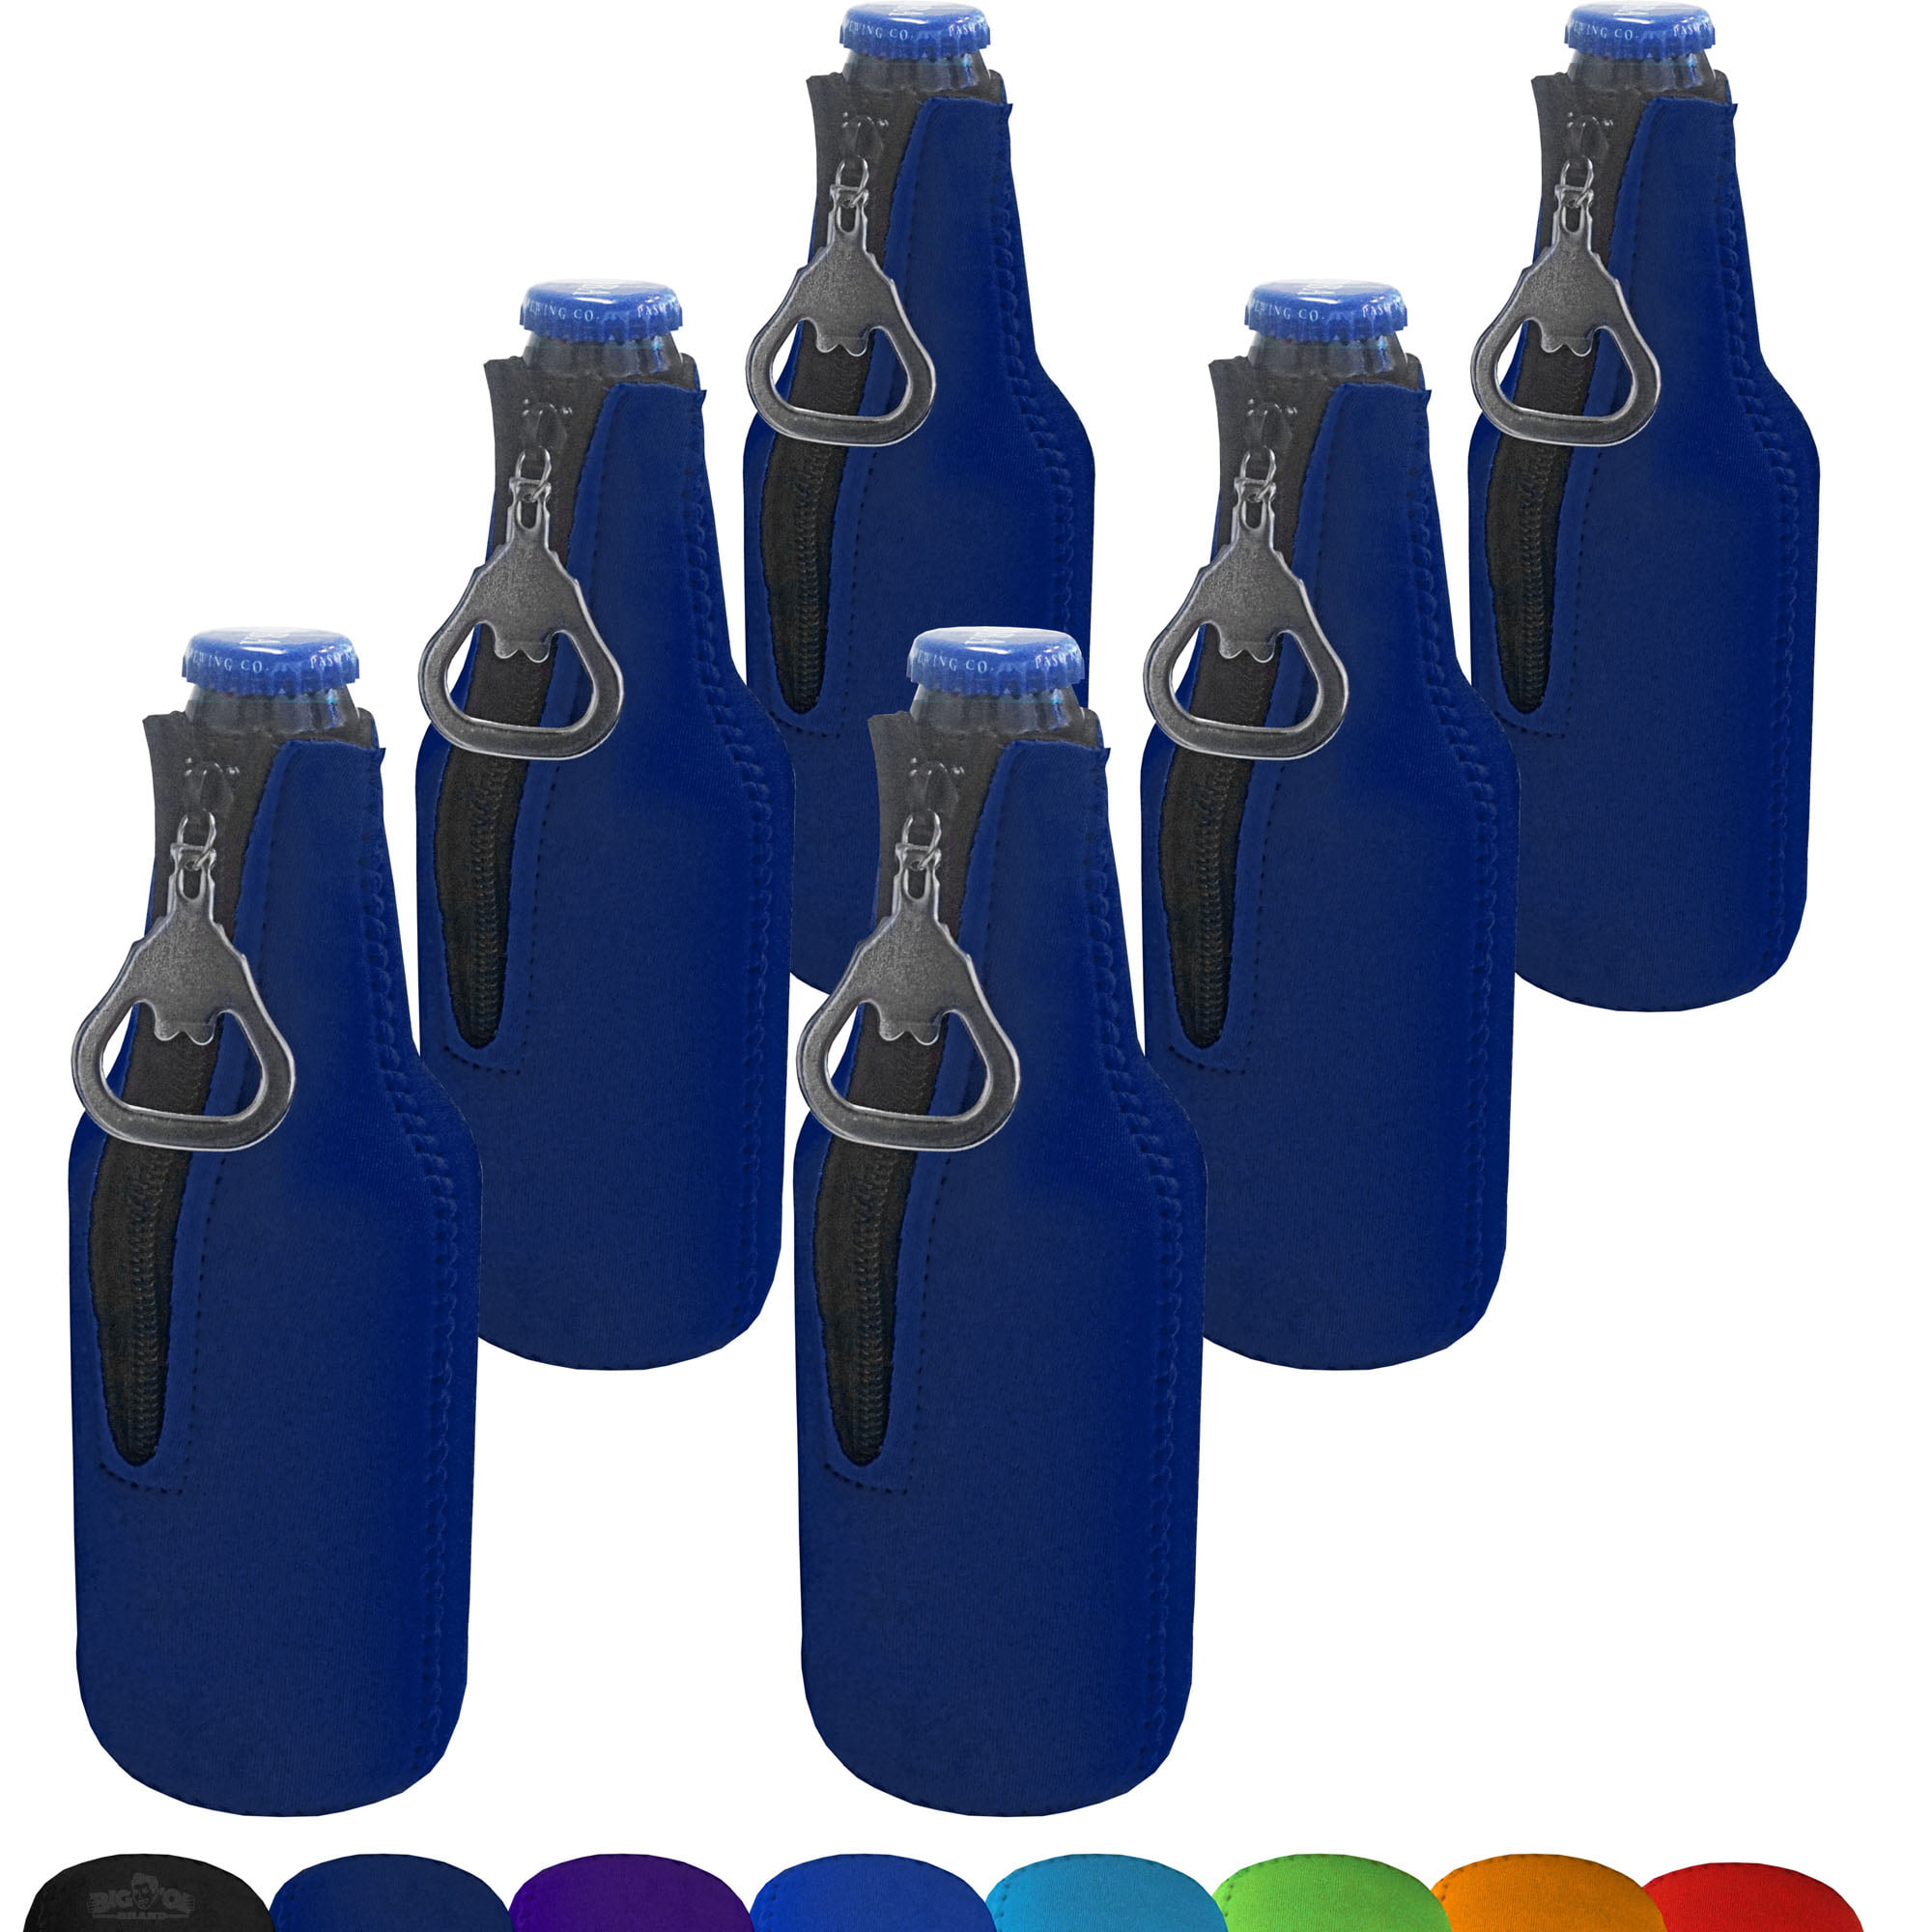 Insulated Zipper Bottle Cooler Koozies - Set of 2 » Made In Michigan